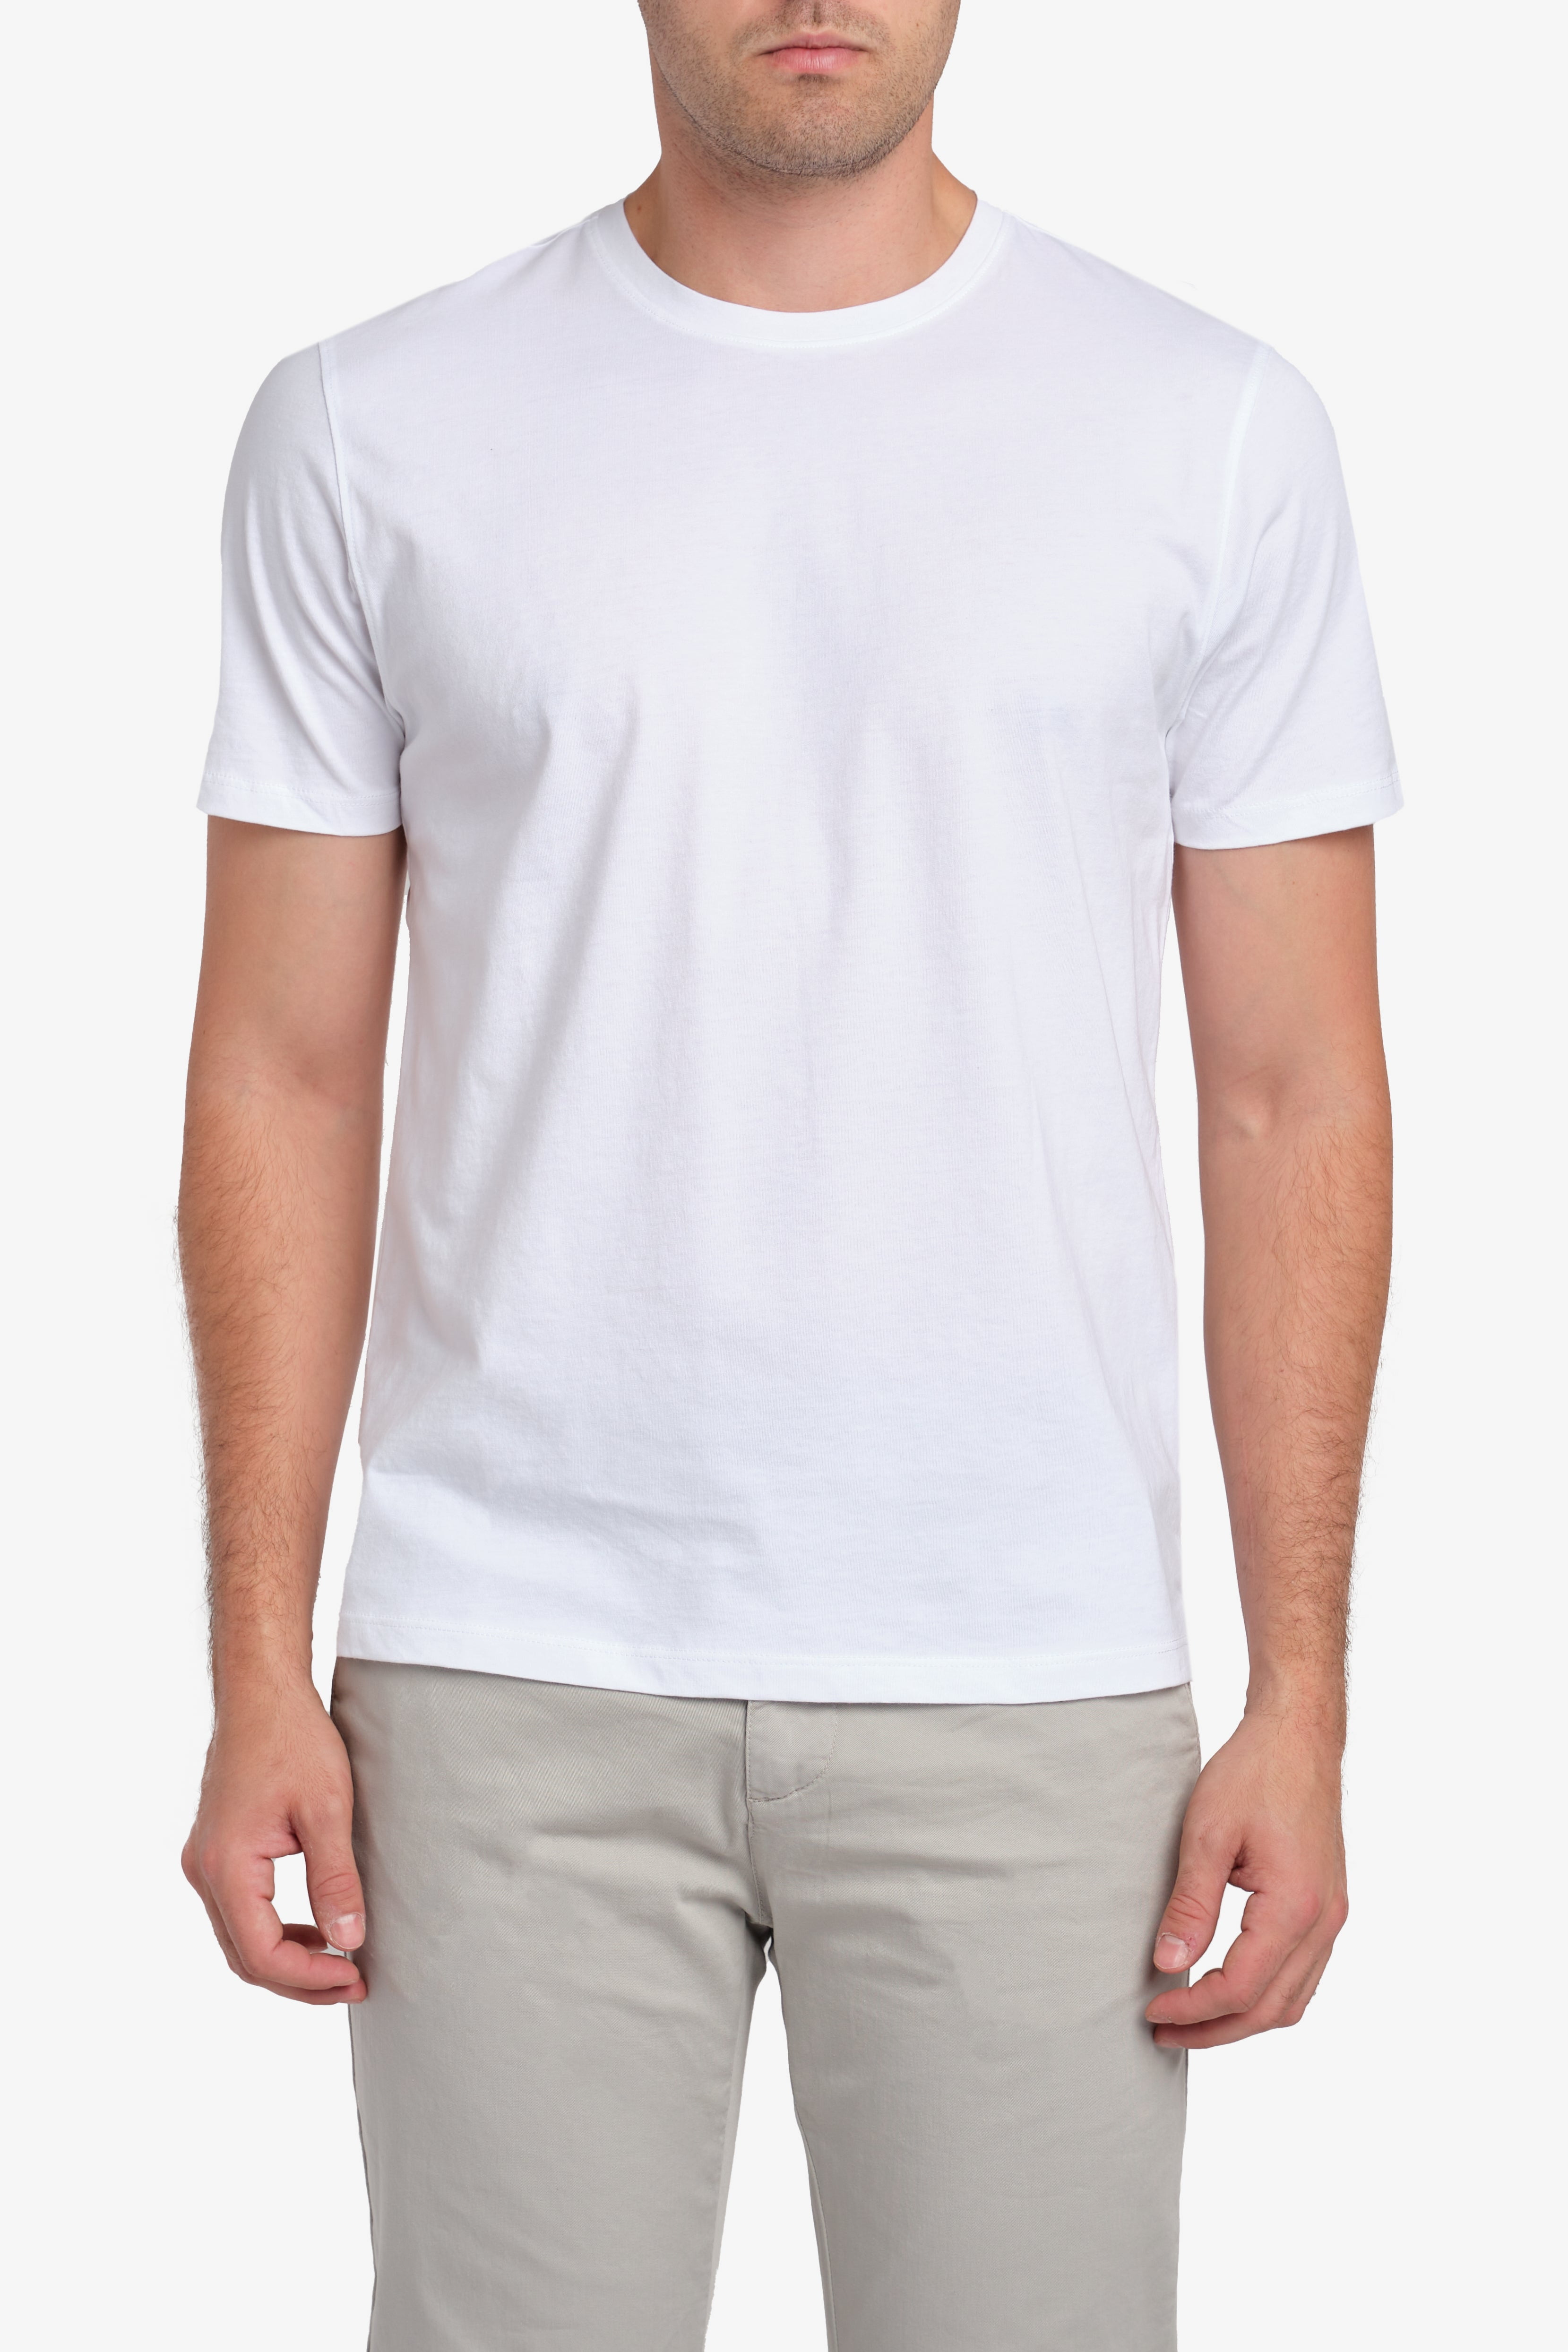 Zachary Prell Mens Short Sleeve Crew Neck T-Shirt - Walmart.com